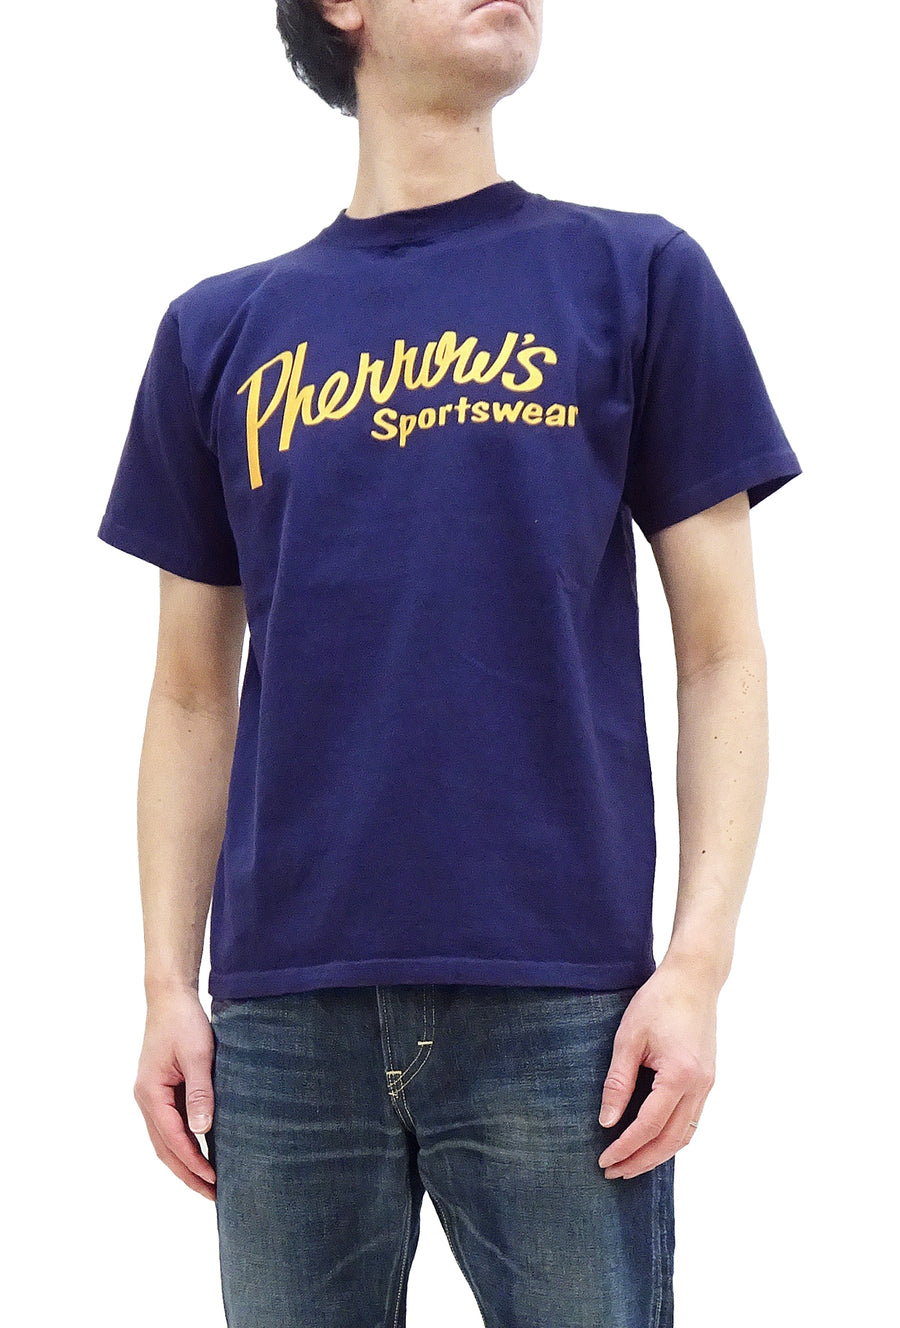 Pherrow's T-Shirt Men's Loopwheeled Short Sleeve Logo Graphic Tee Pherrows 23S-PT1 Navy-Blue